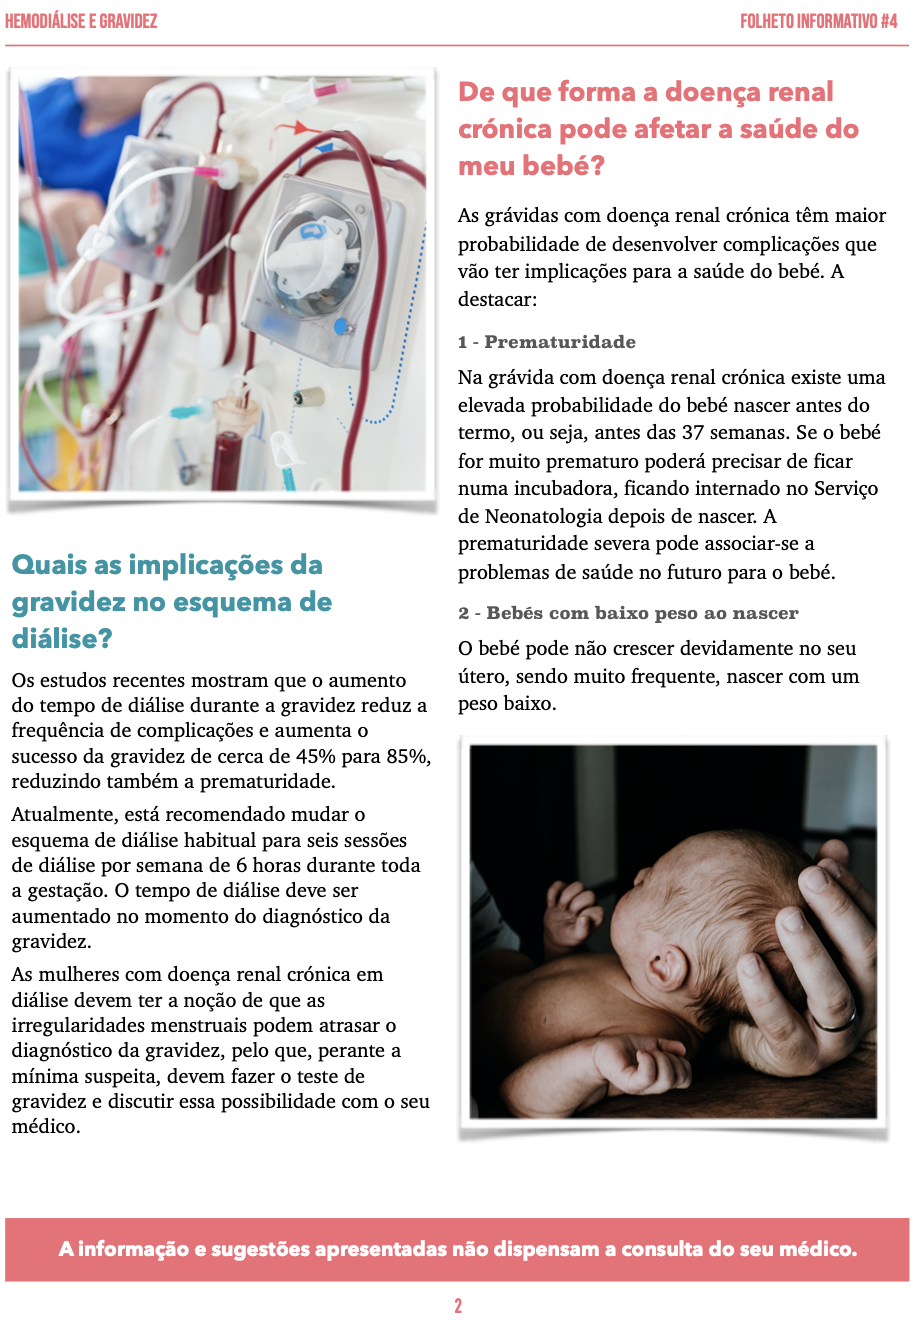 Folheto Informativo 4 - Hemodialise e gravidez_p2.png